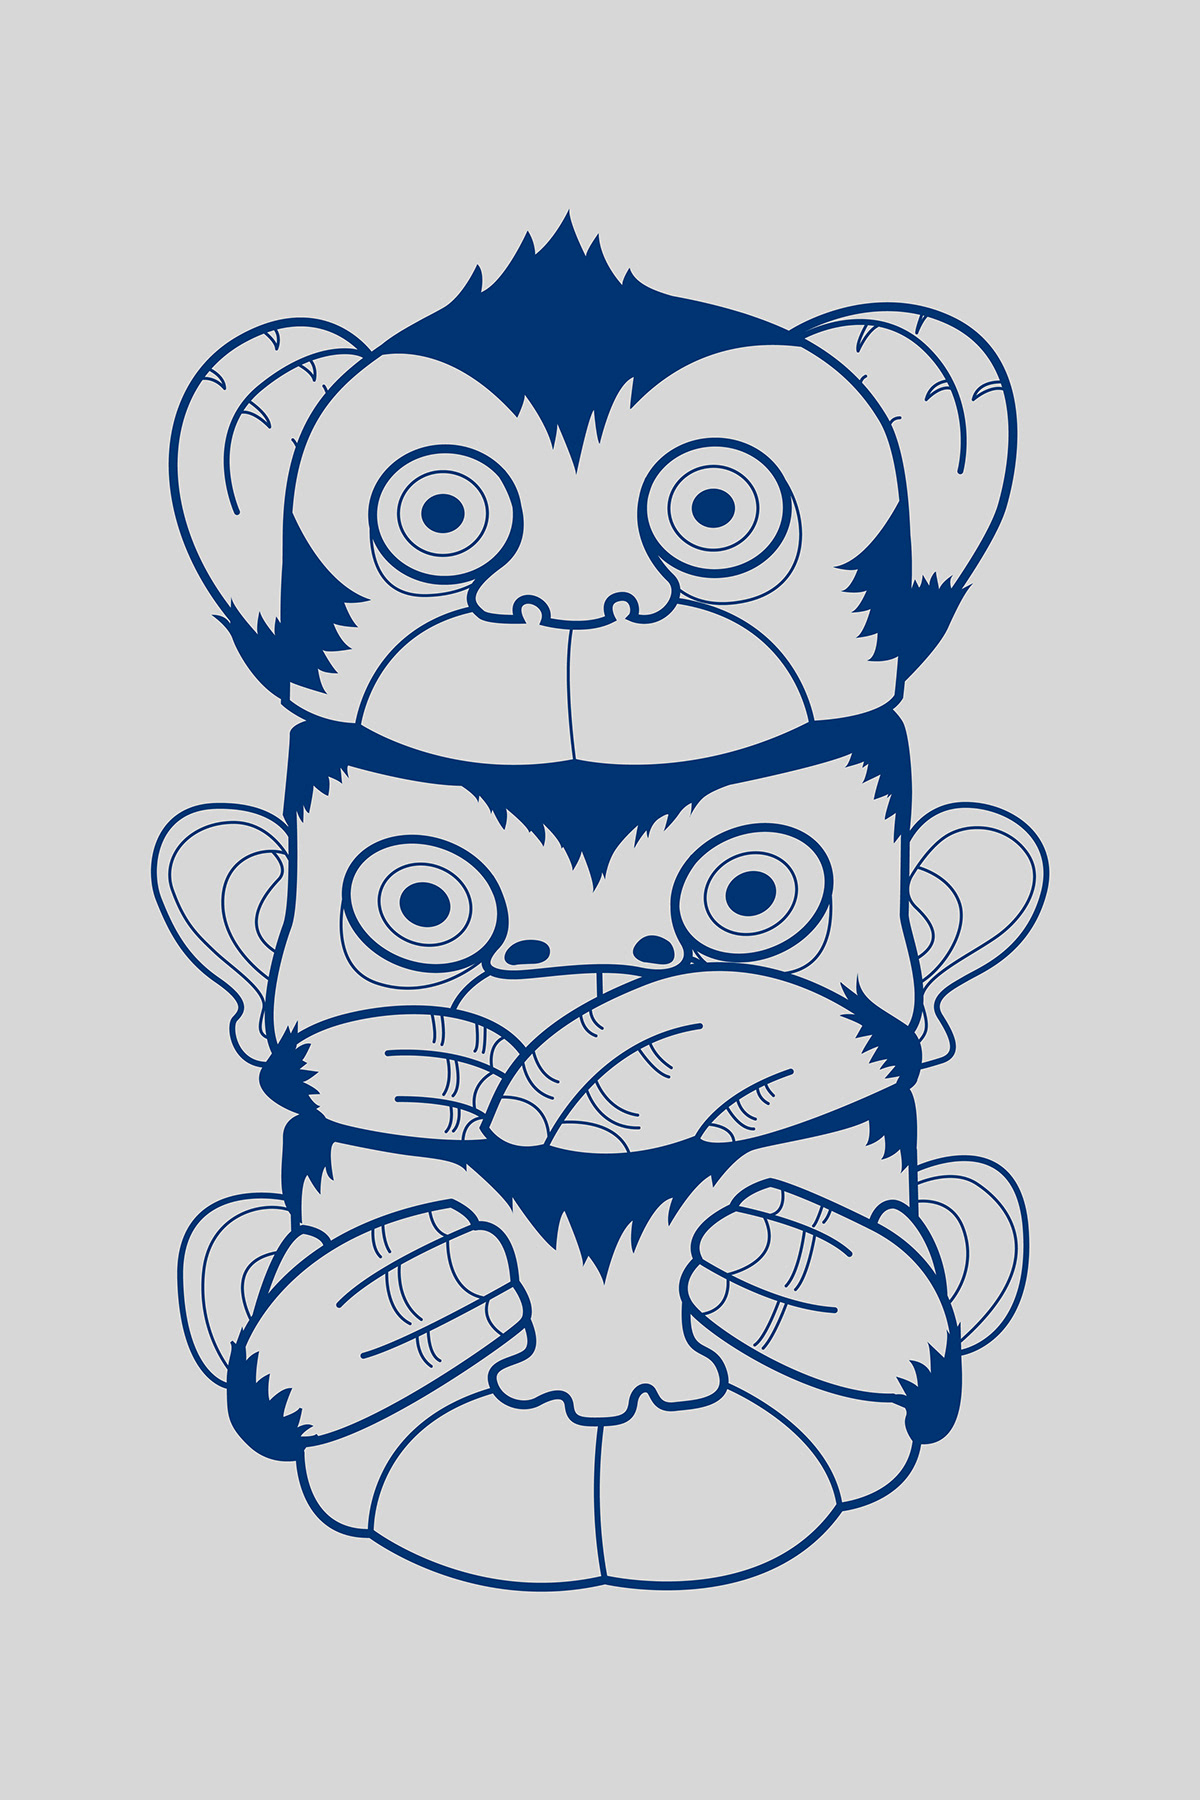 monkeys monkey evil hear speak see